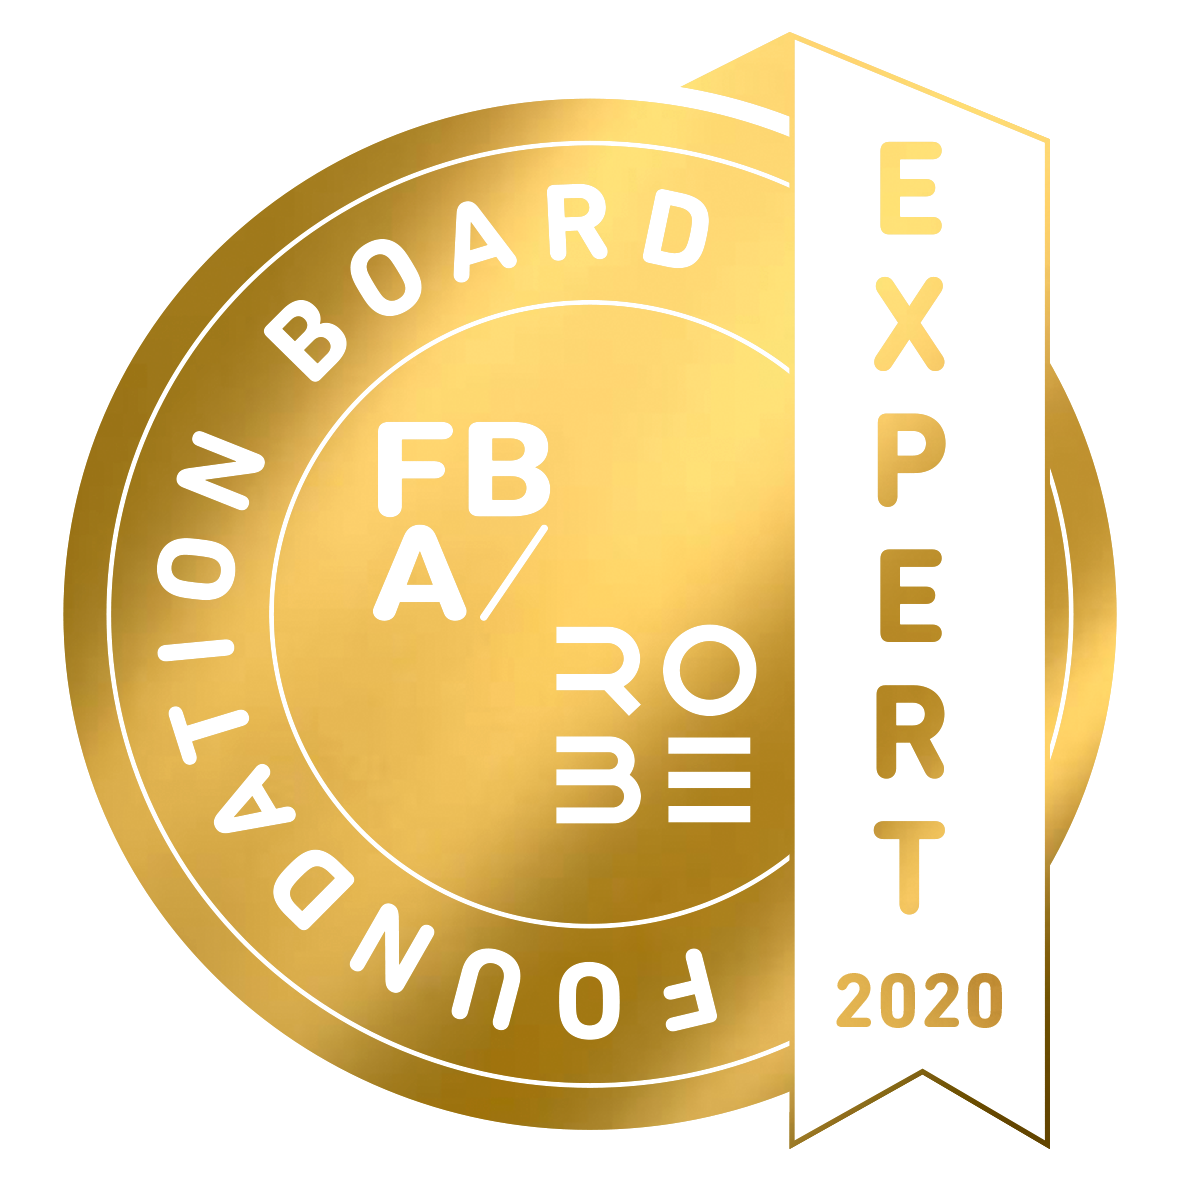 Foundation Board Expert 2020